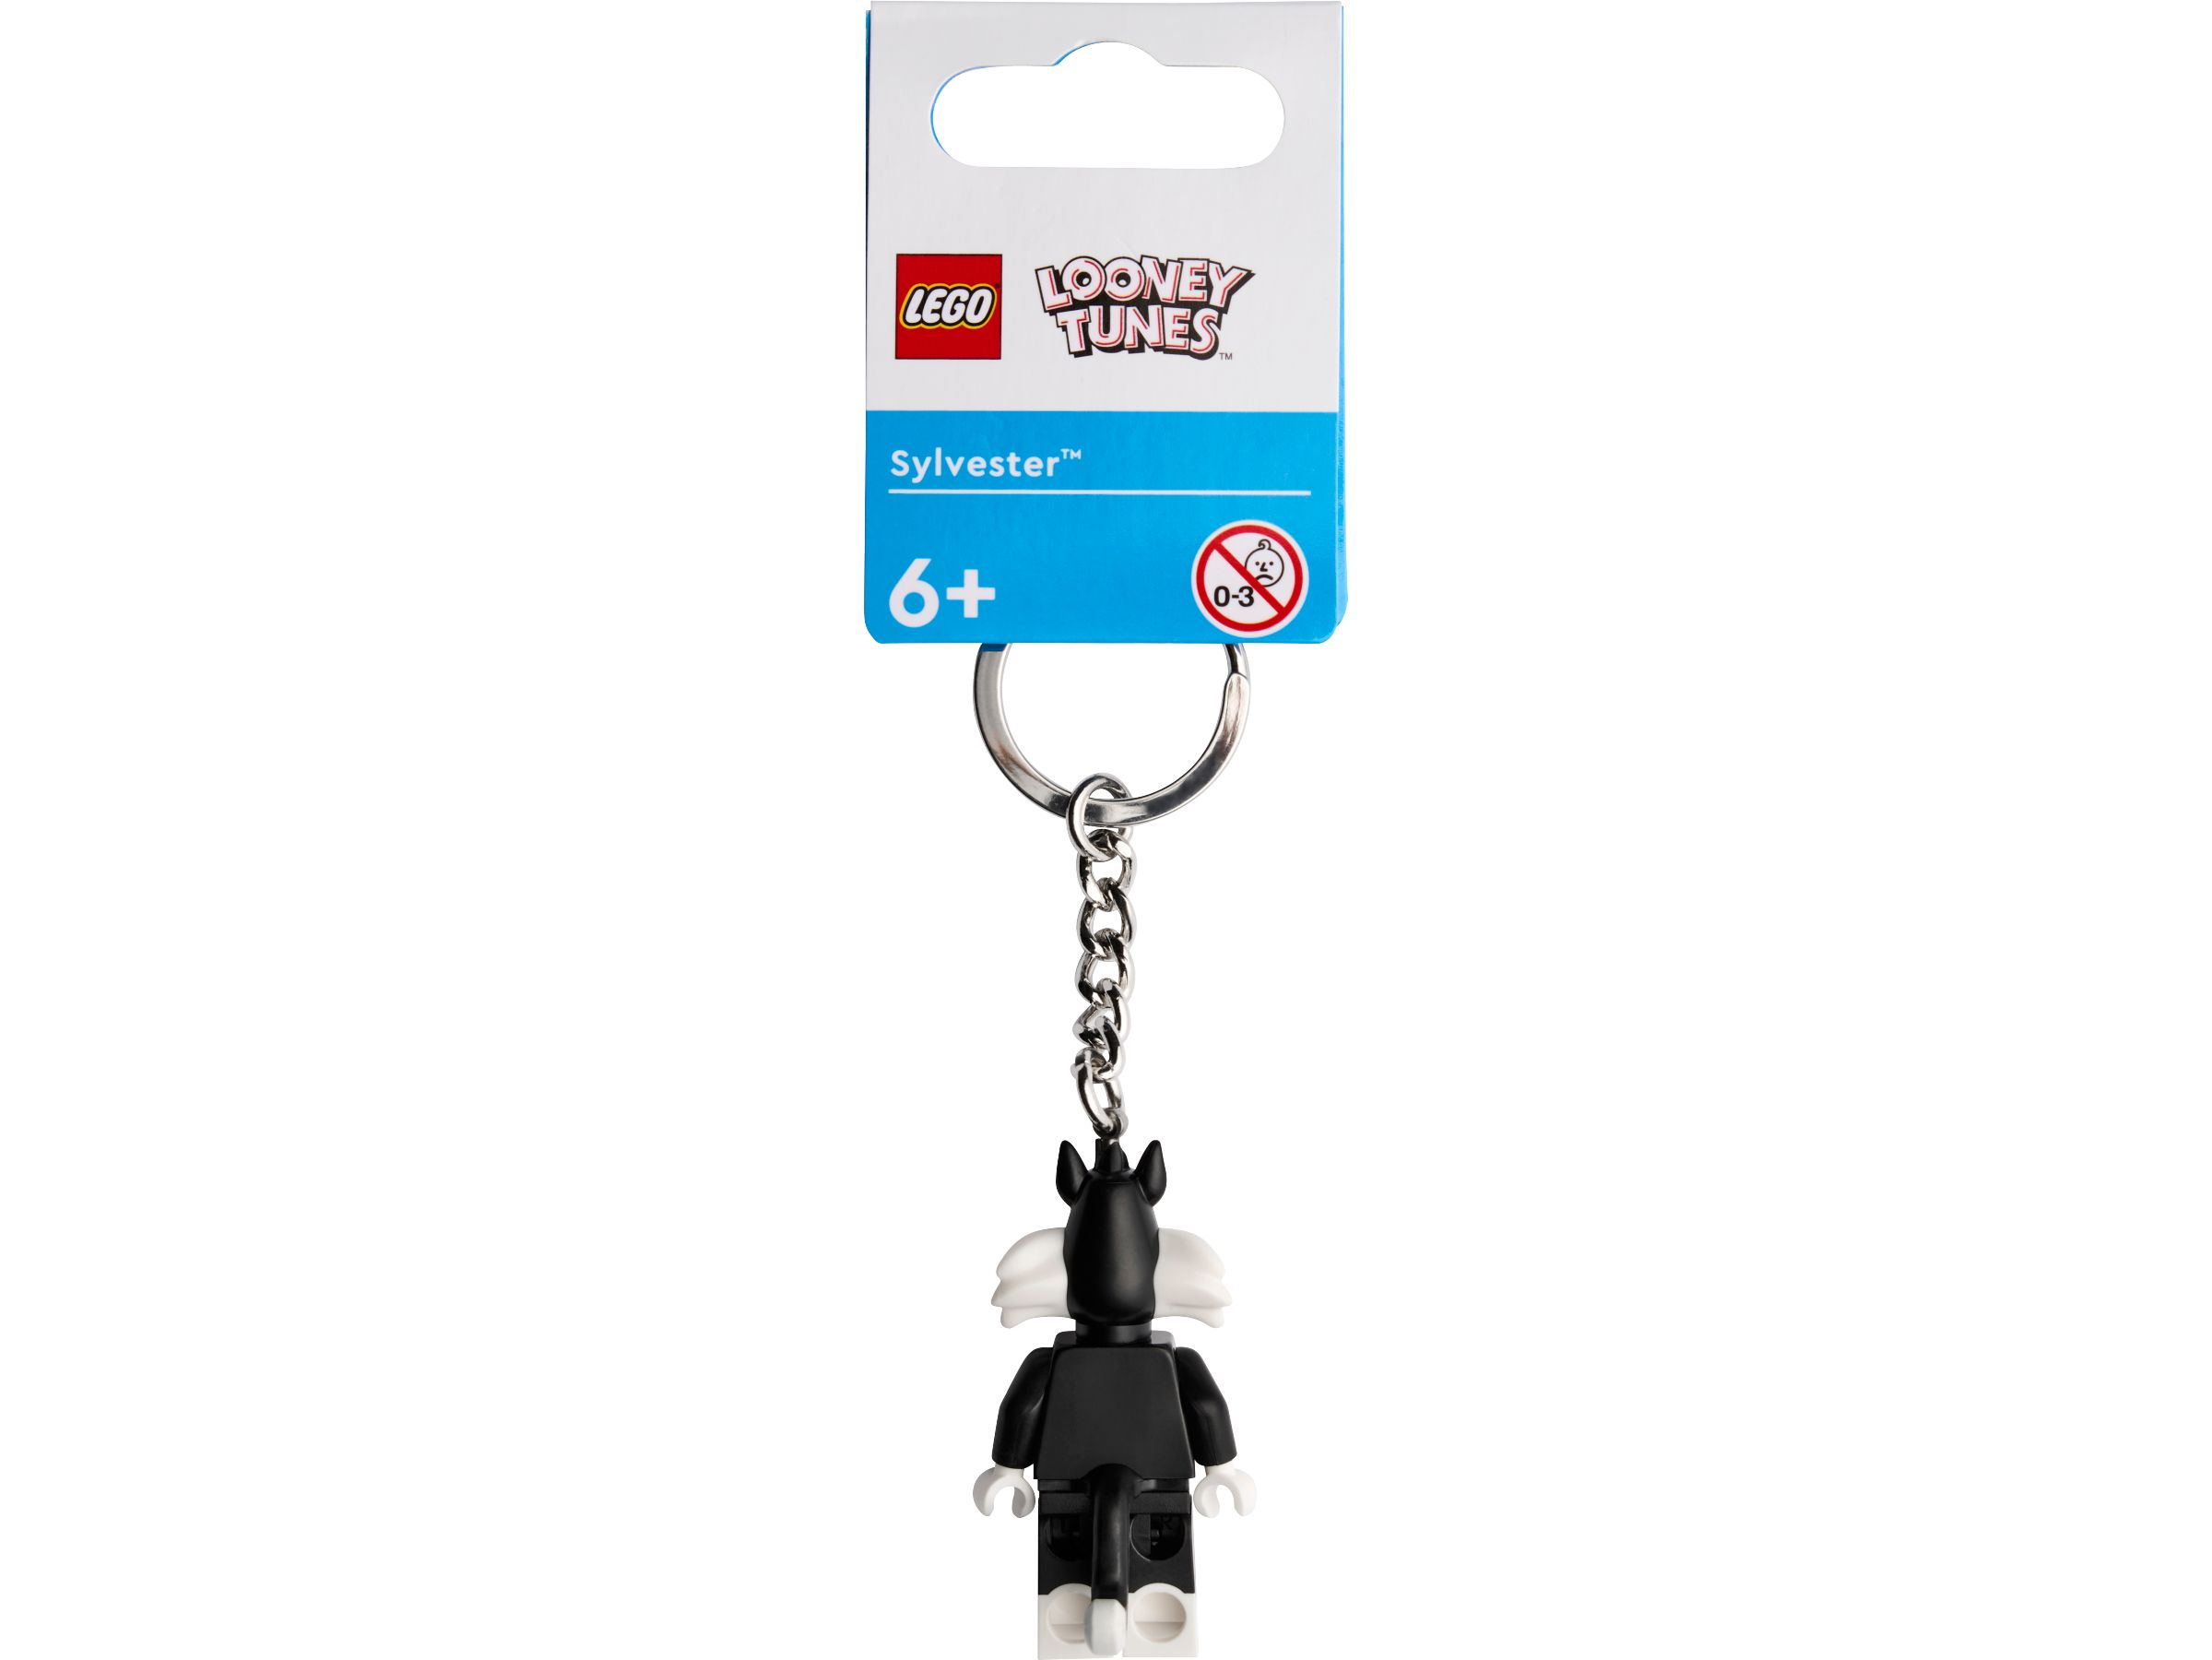 LEGO Gear 854190 Sylvester™ Schlüsselanhänger LEGO_854190_alt2.jpg